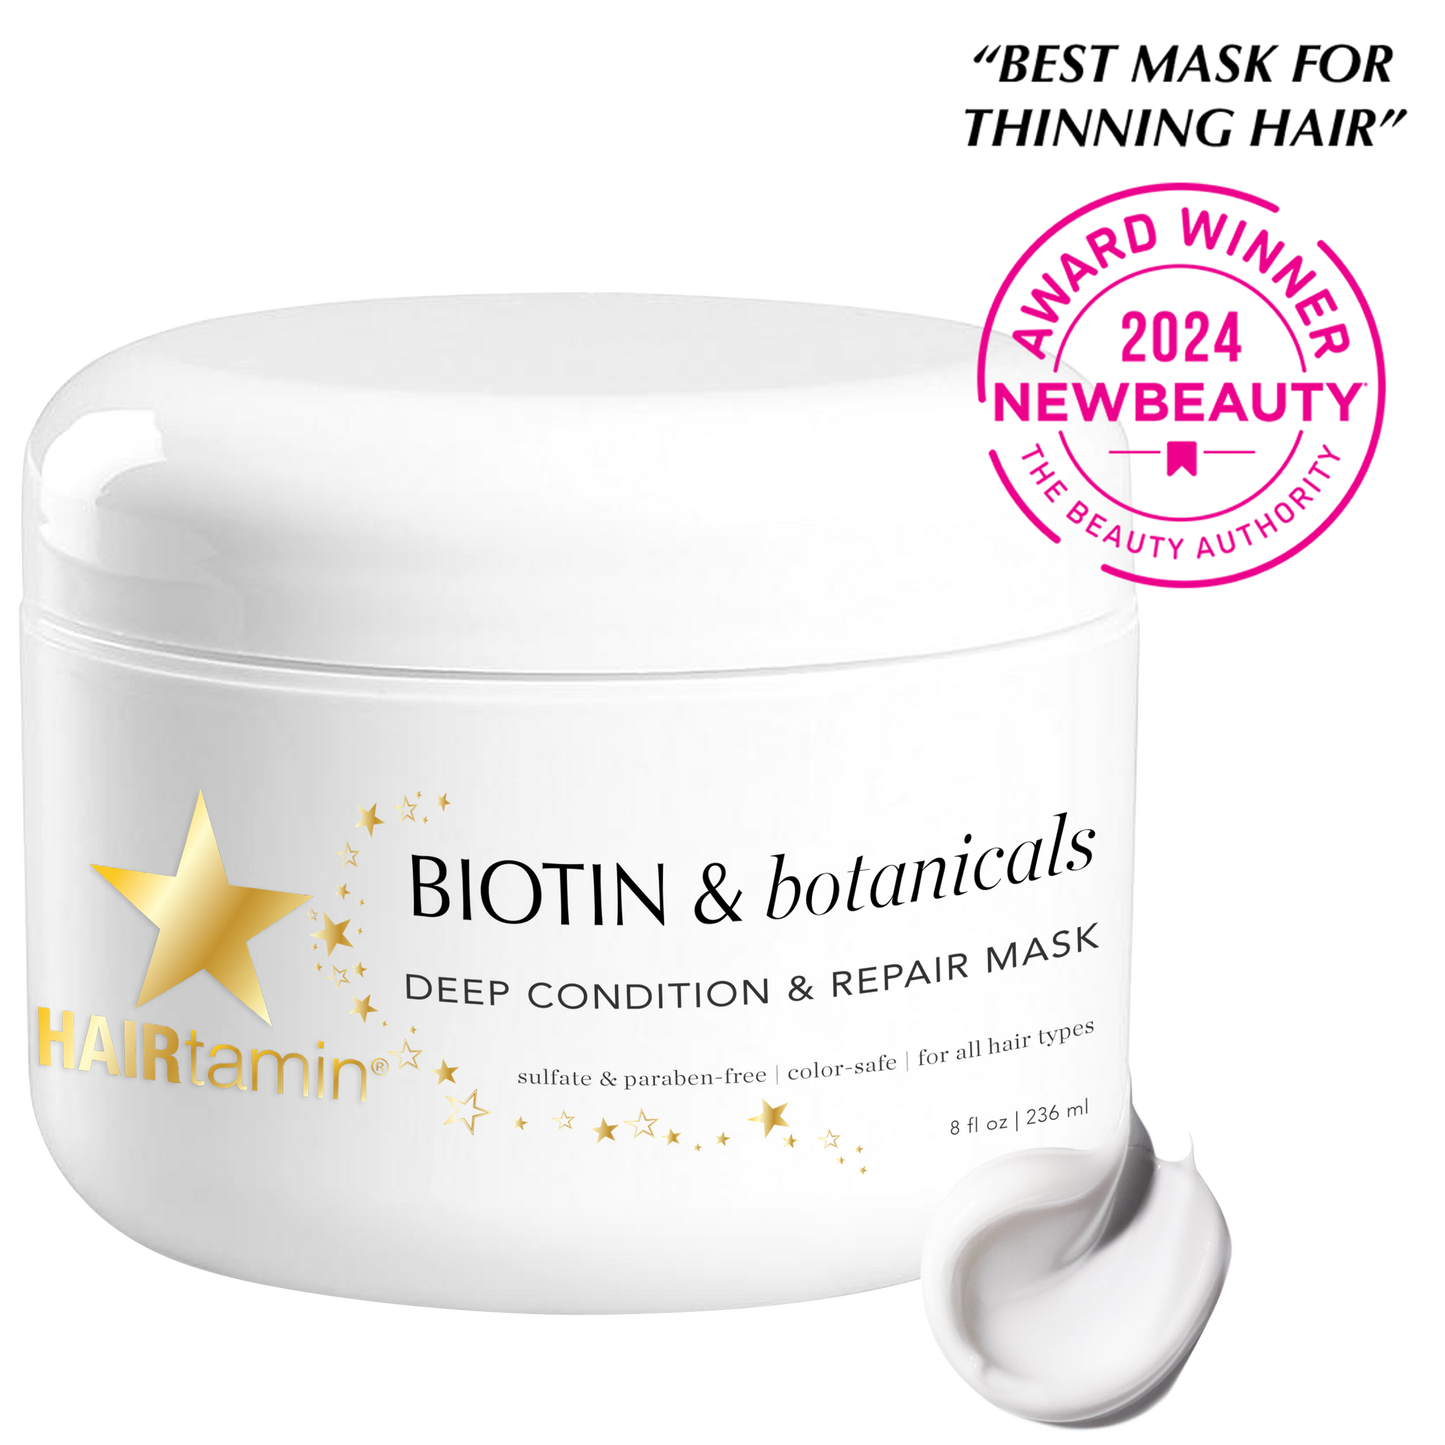 Biotin & Botanicals Deep Condition & Repair Hair Mask - 1 Pack